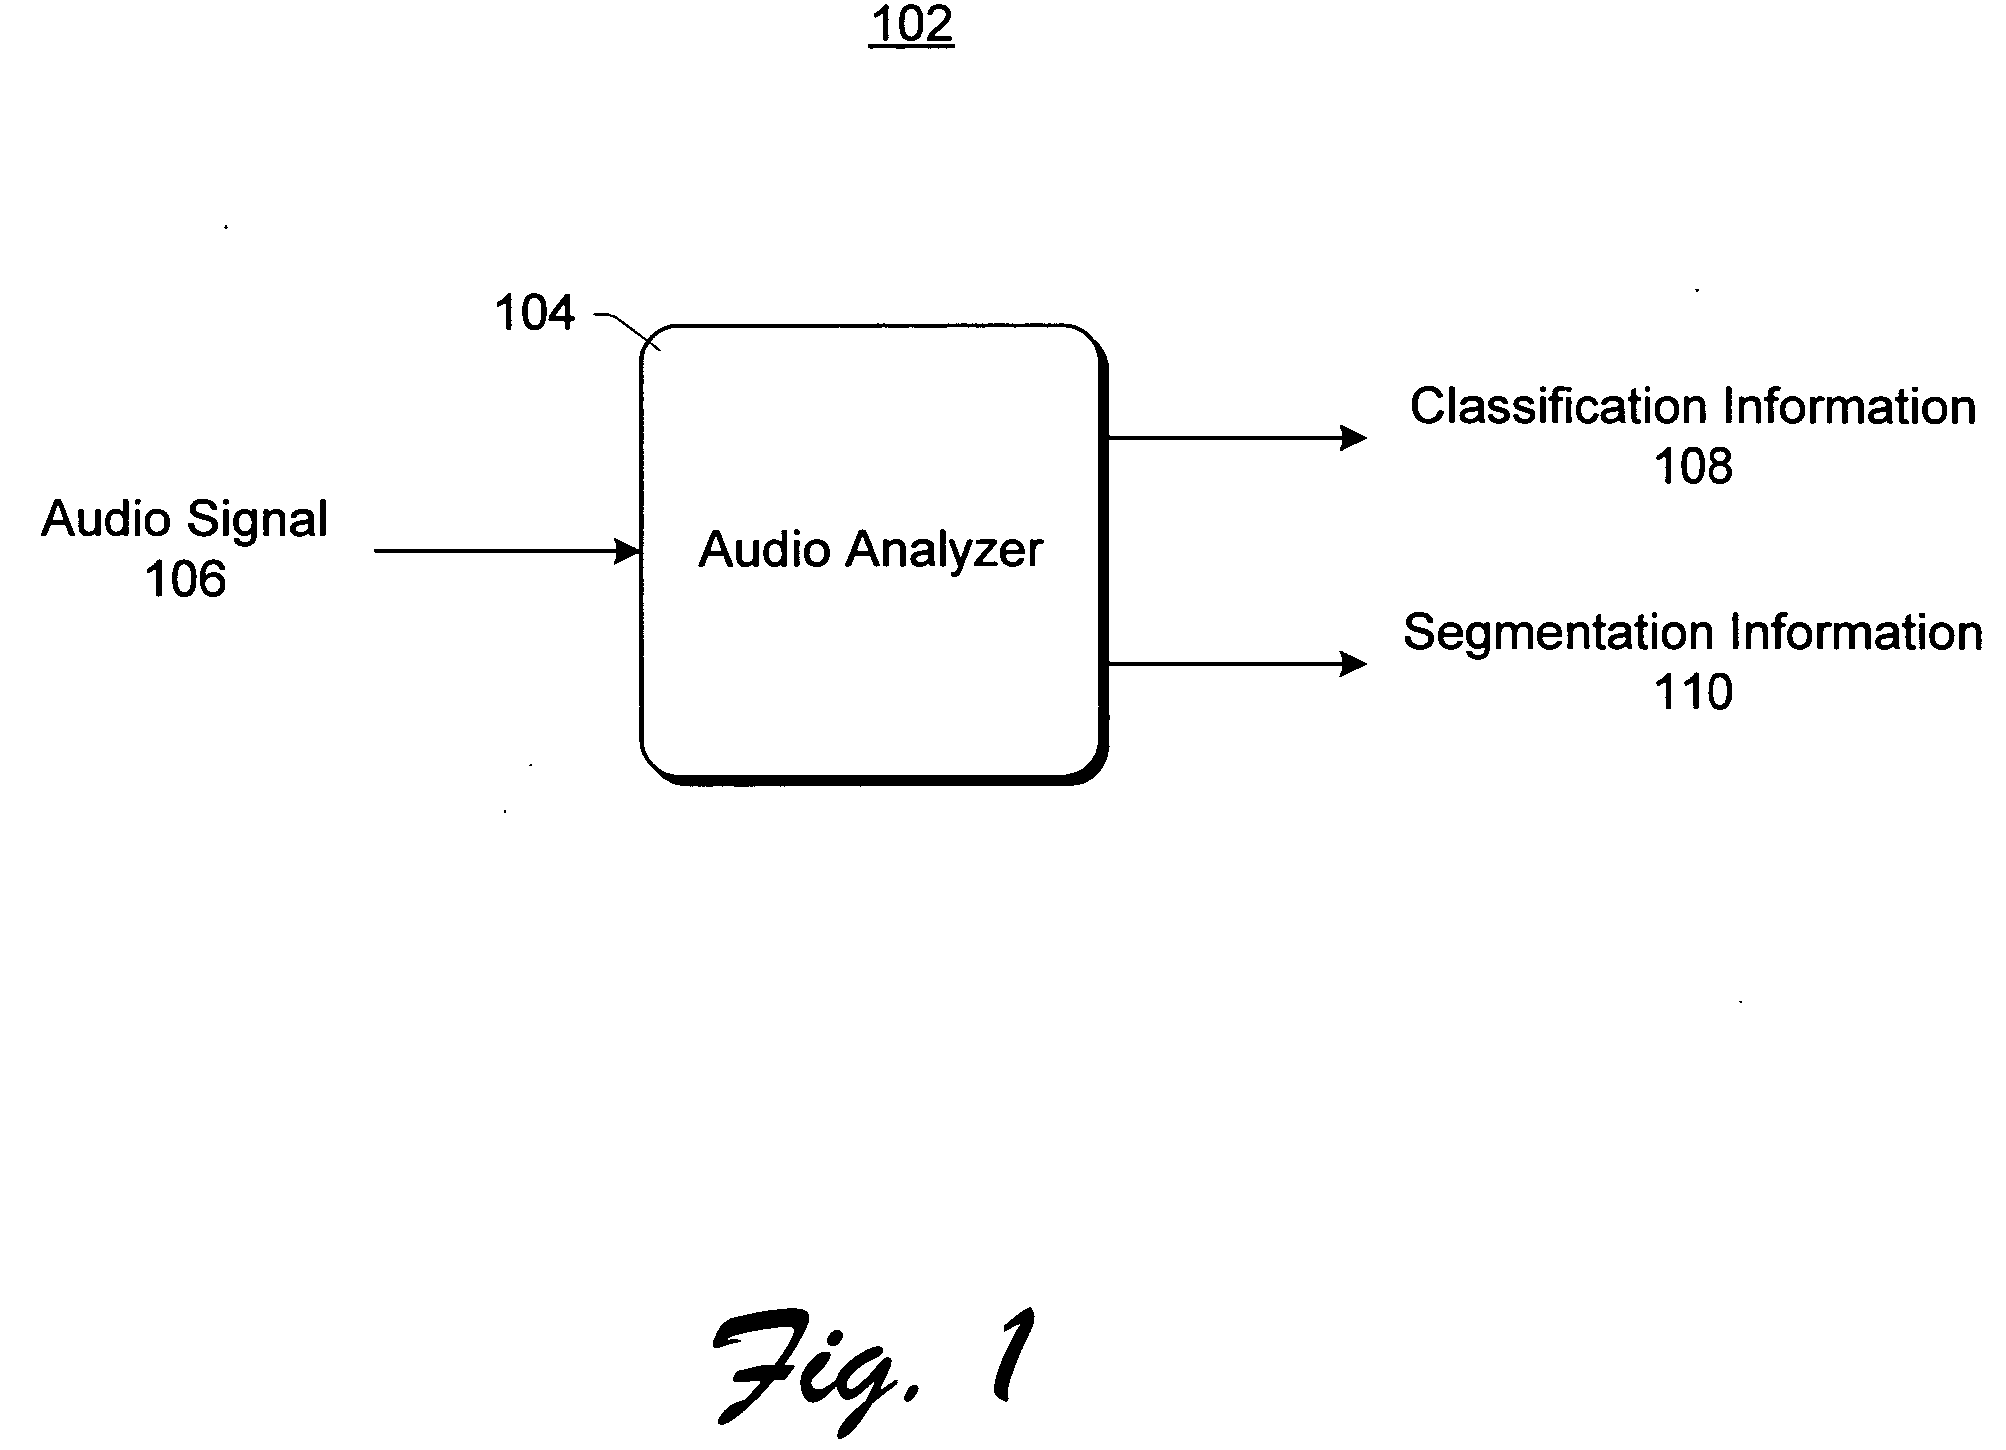 Audio segmentation and classification